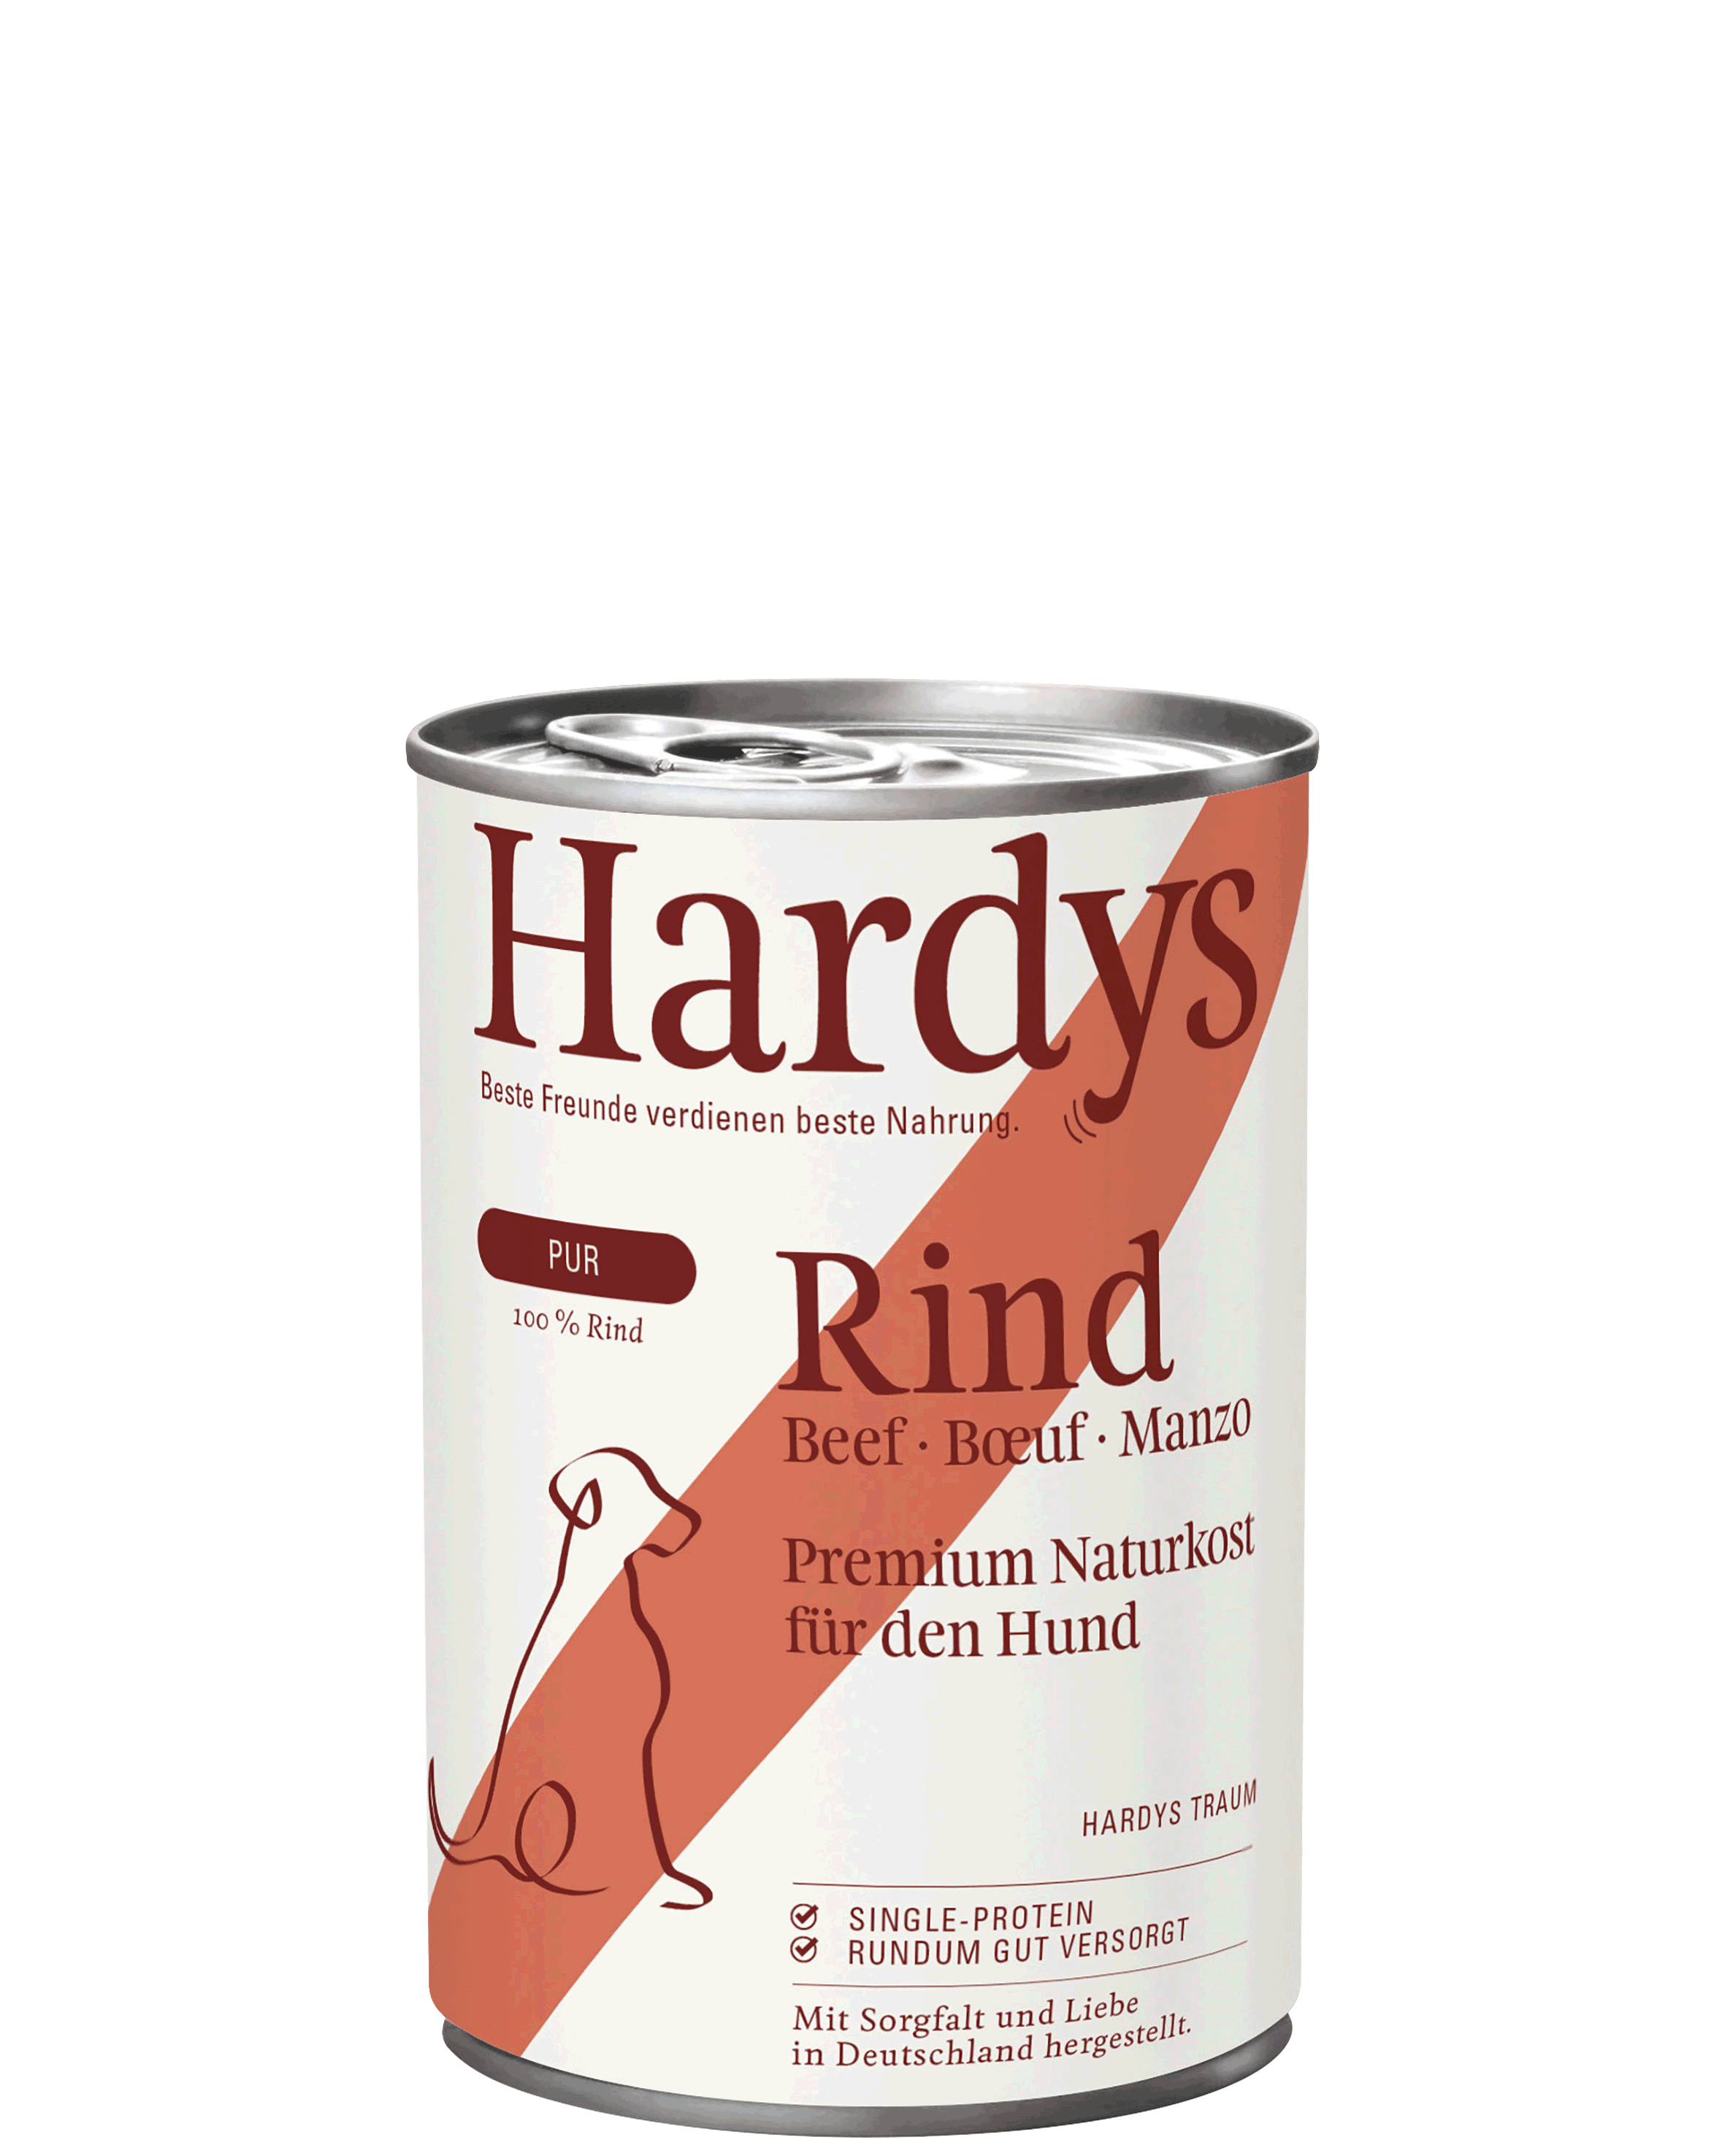 Hardys Pur Rind, 400 g